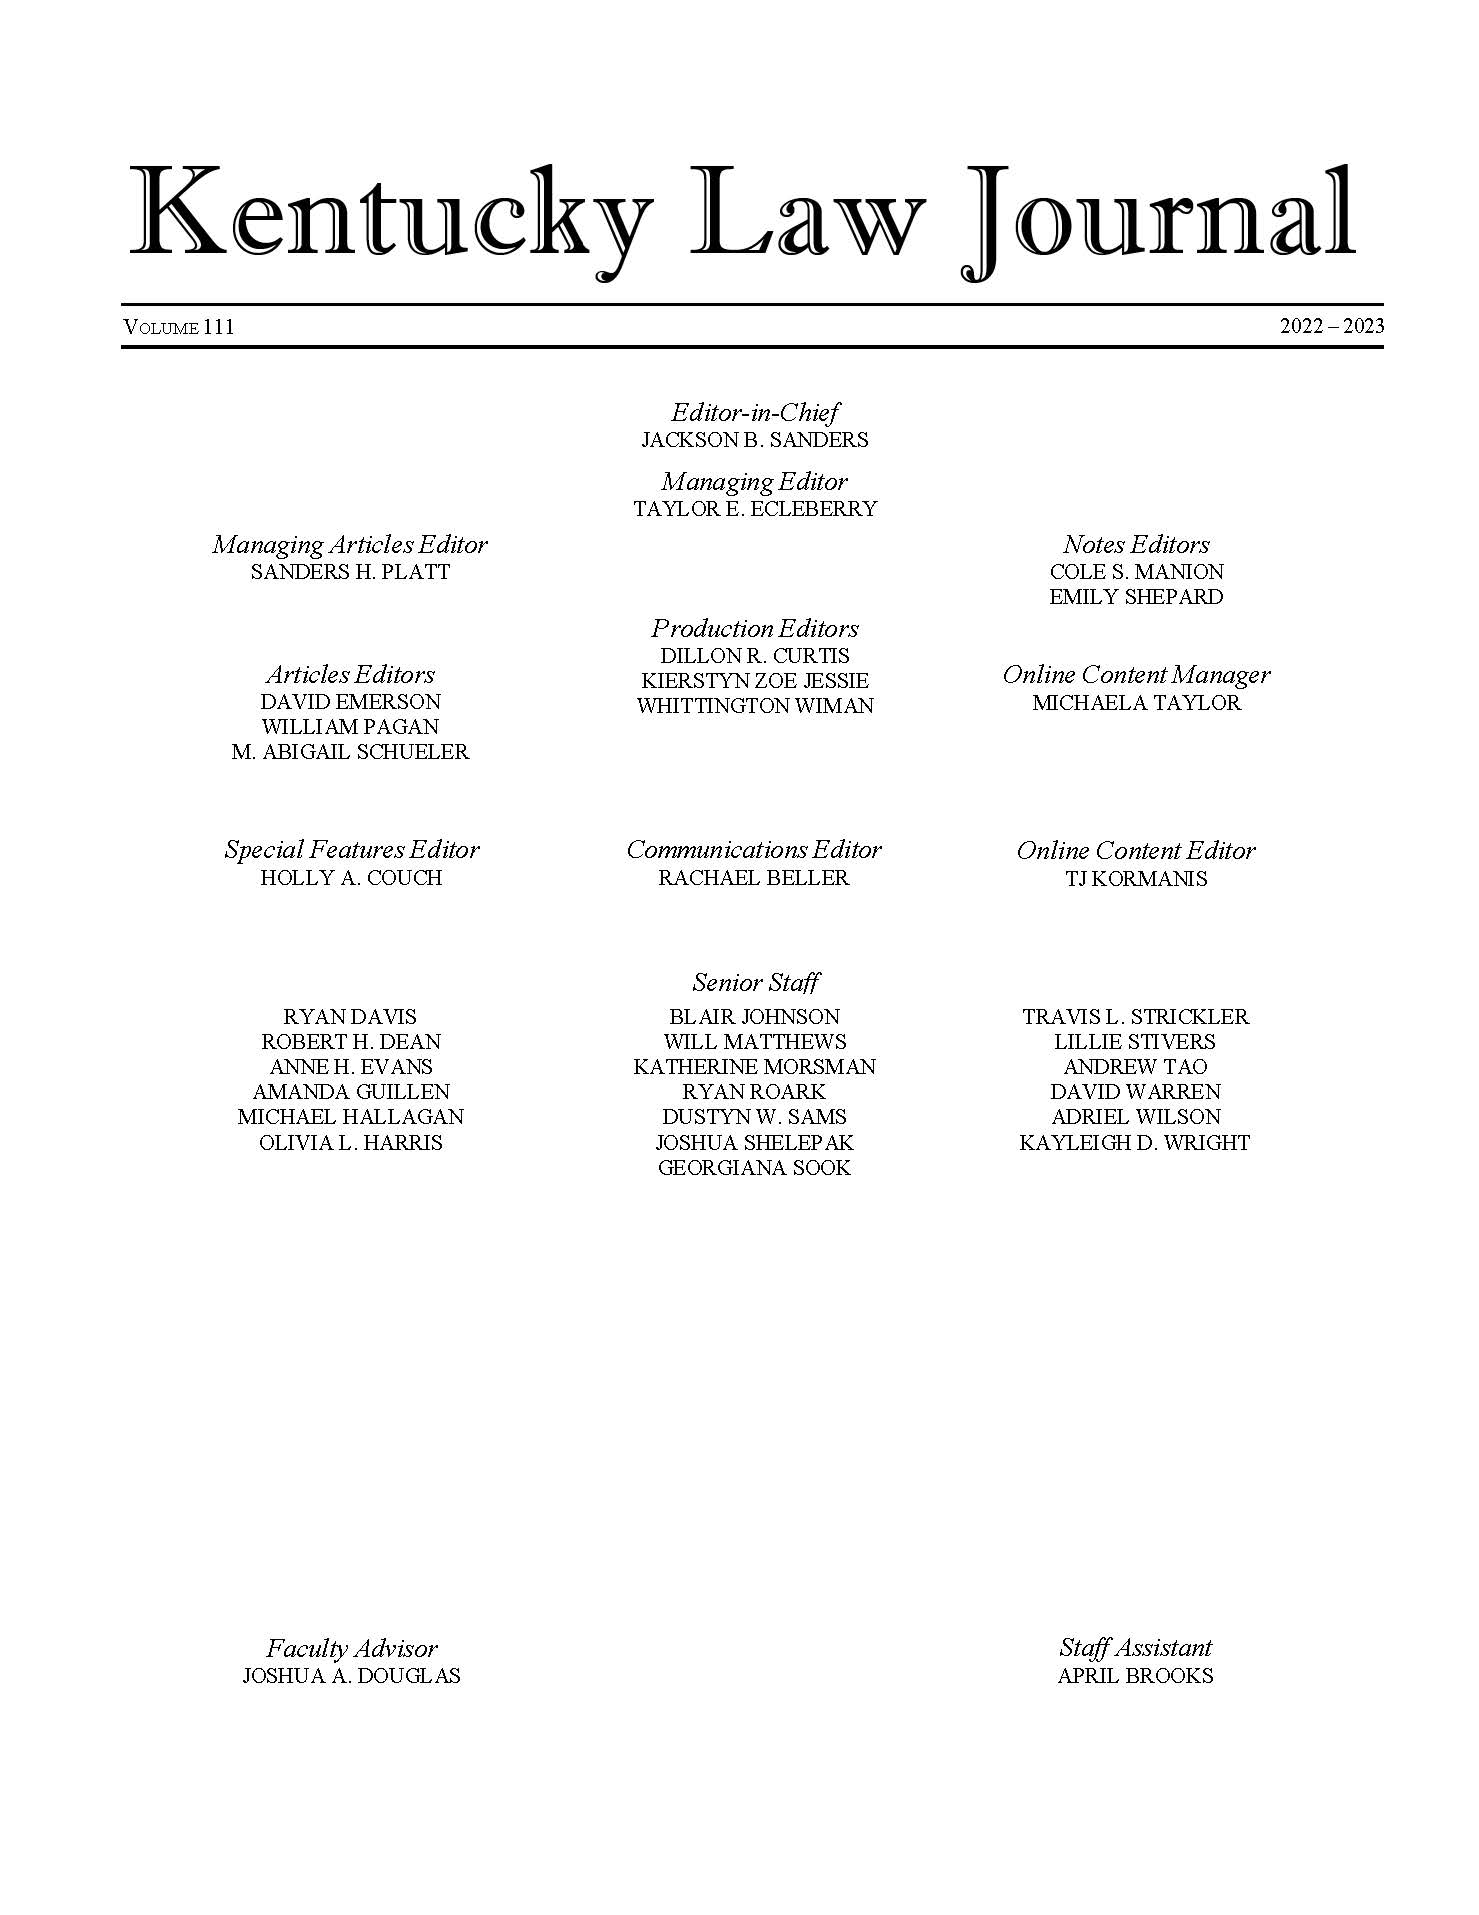 Law Journal student leadership 